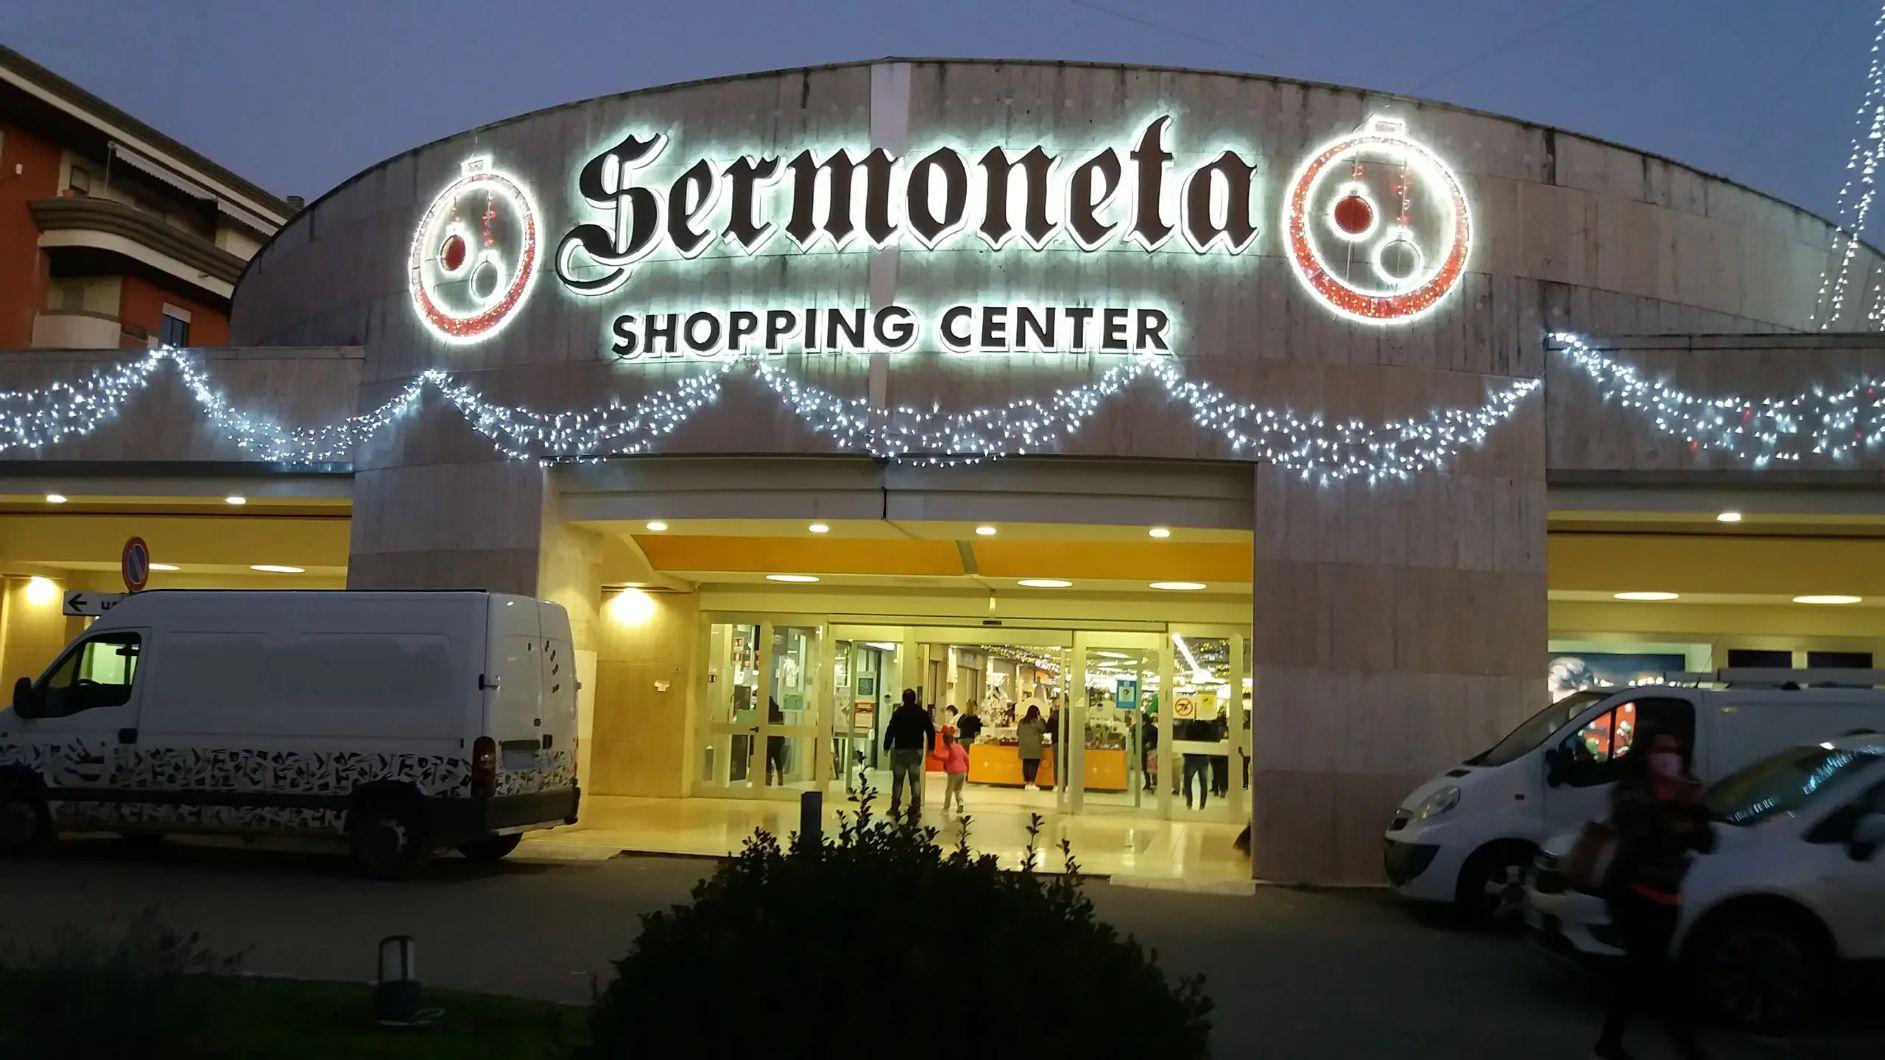 Conversione da Neon a Led Latina, C.C. Sermoneta Shopping Center